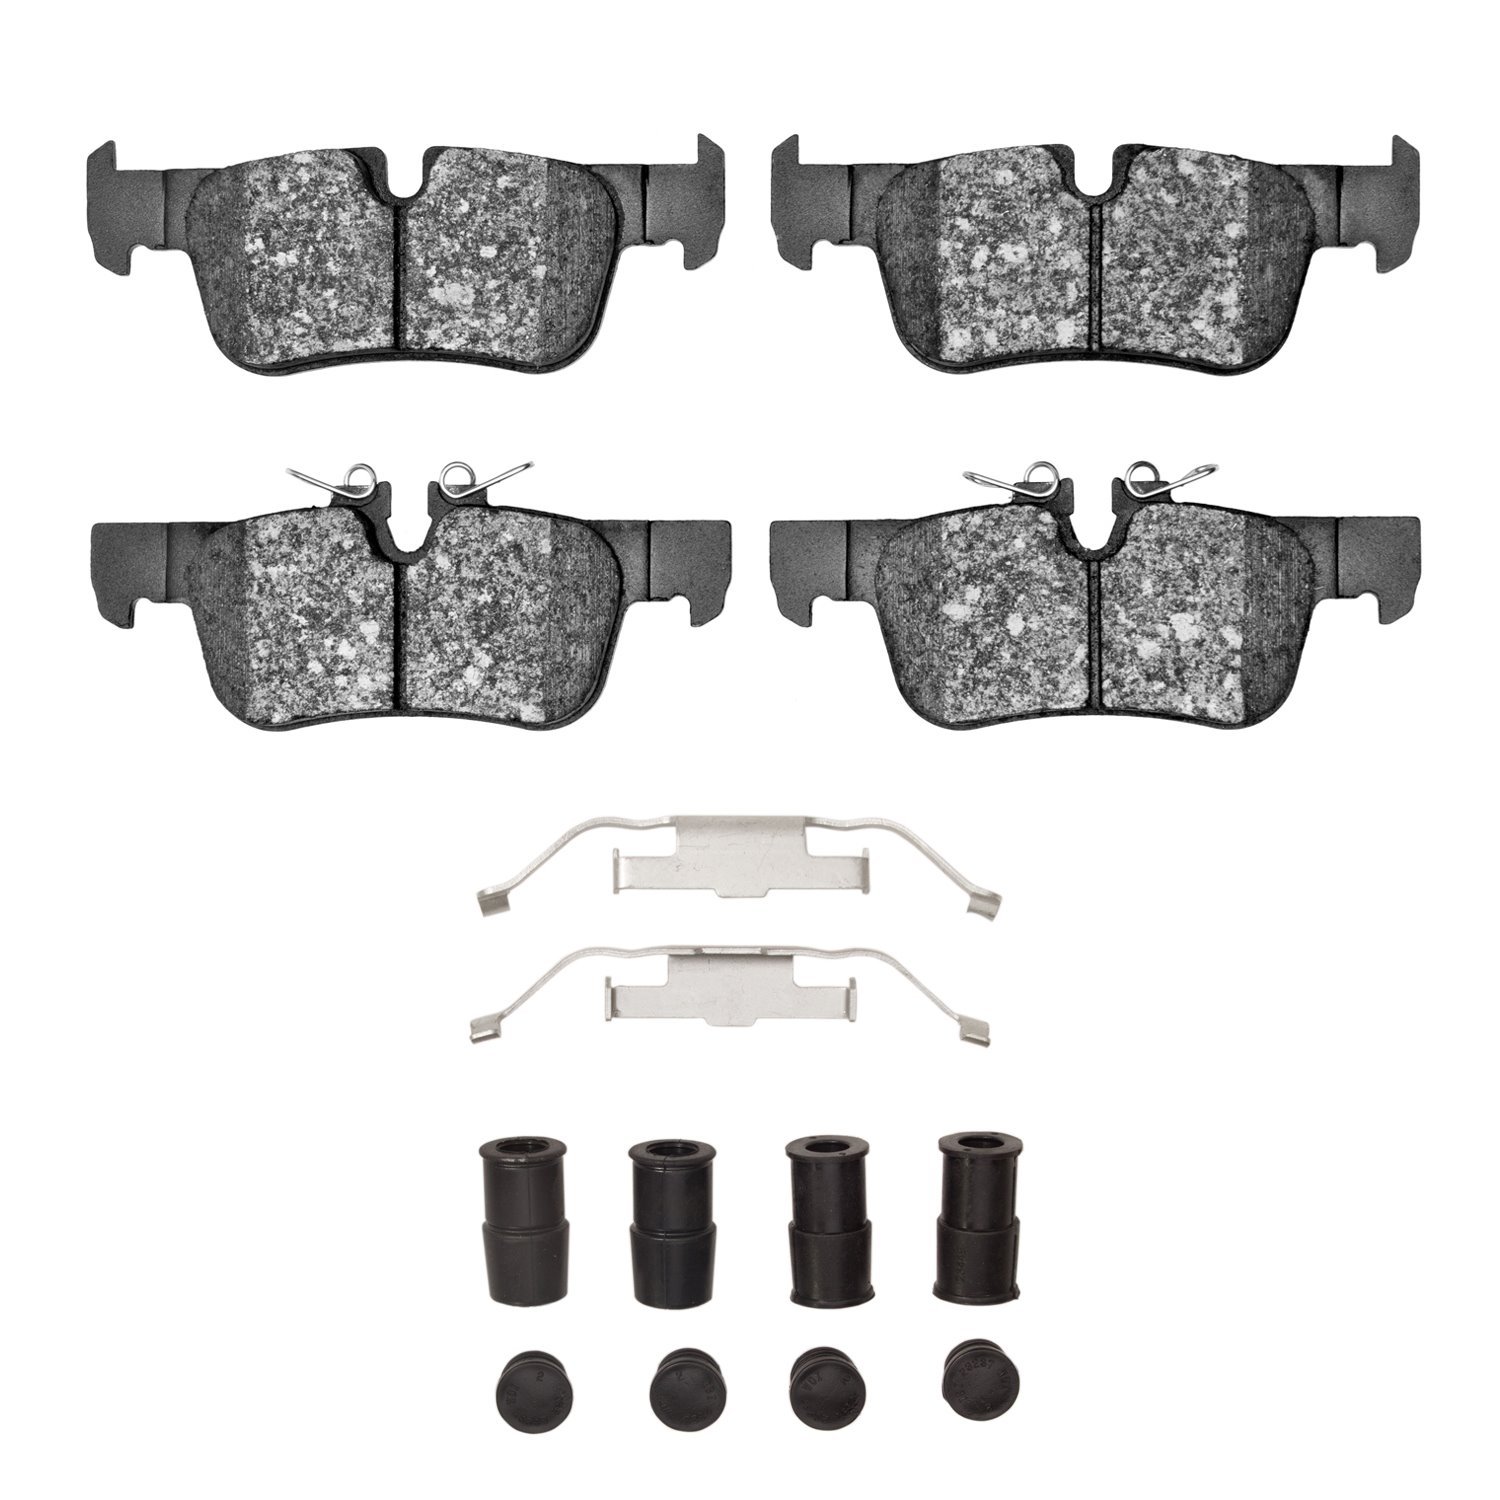 1552-1762-01 5000 Advanced Ceramic Brake Pads & Hardware Kit, 2015-2019 Multiple Makes/Models, Position: Rear